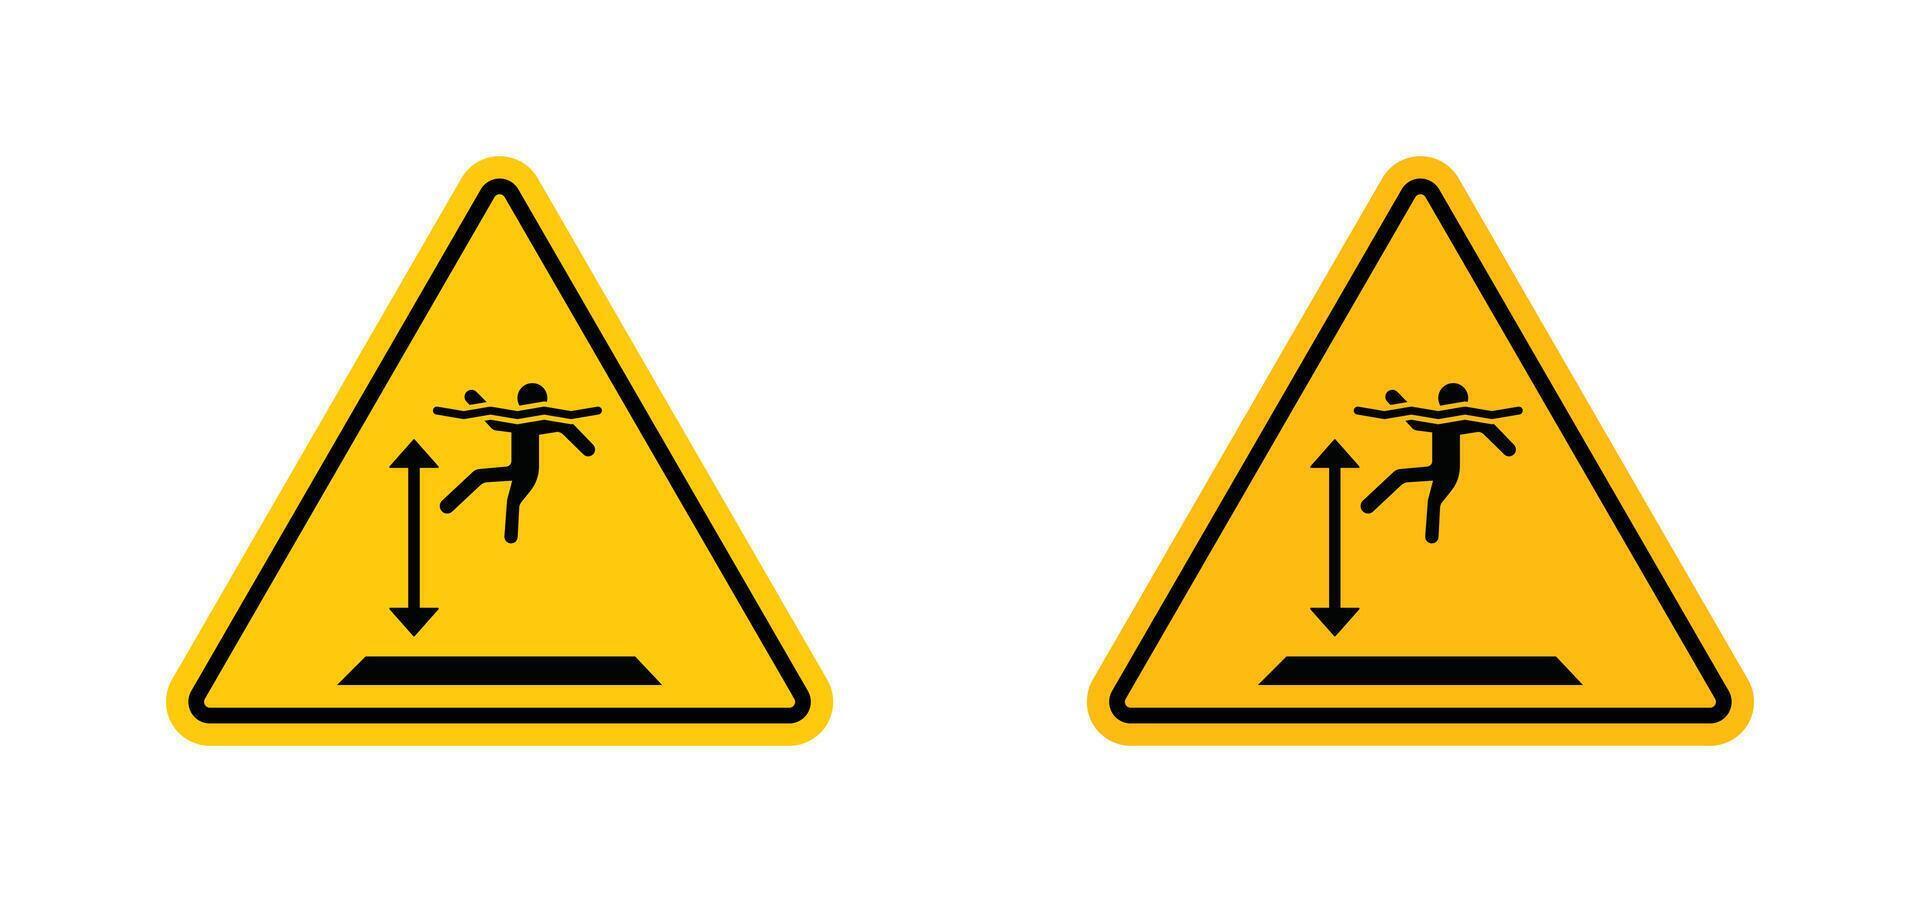 Deep water warning sign vector